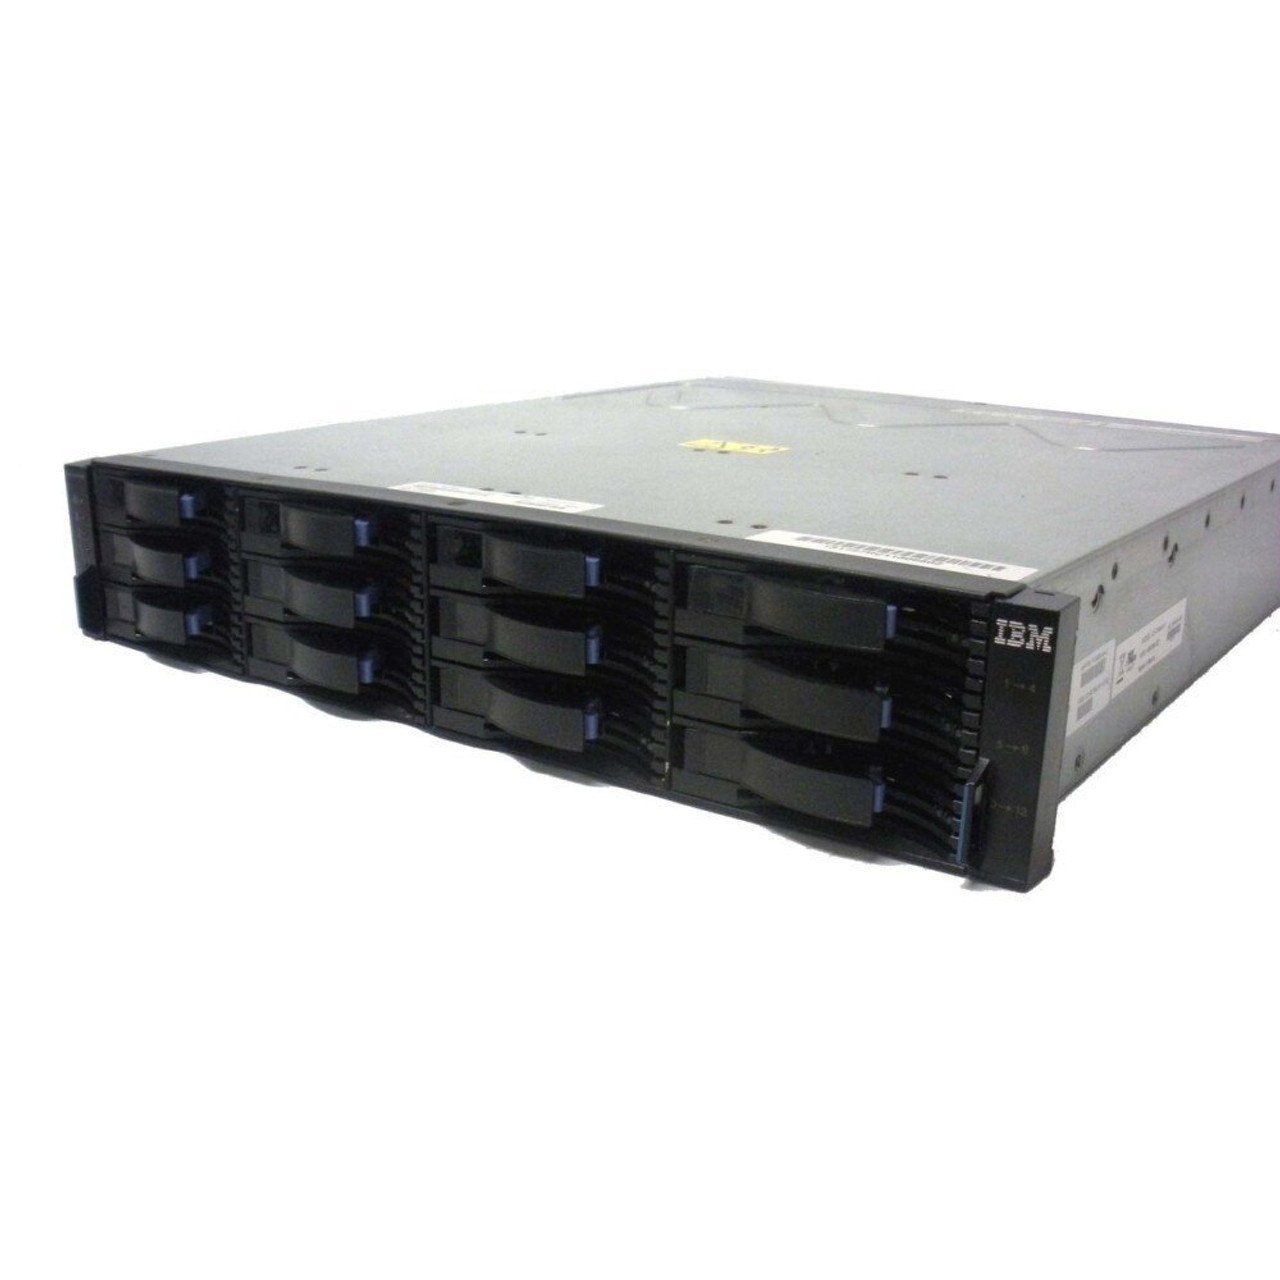 IBM DS3000 Storage Server